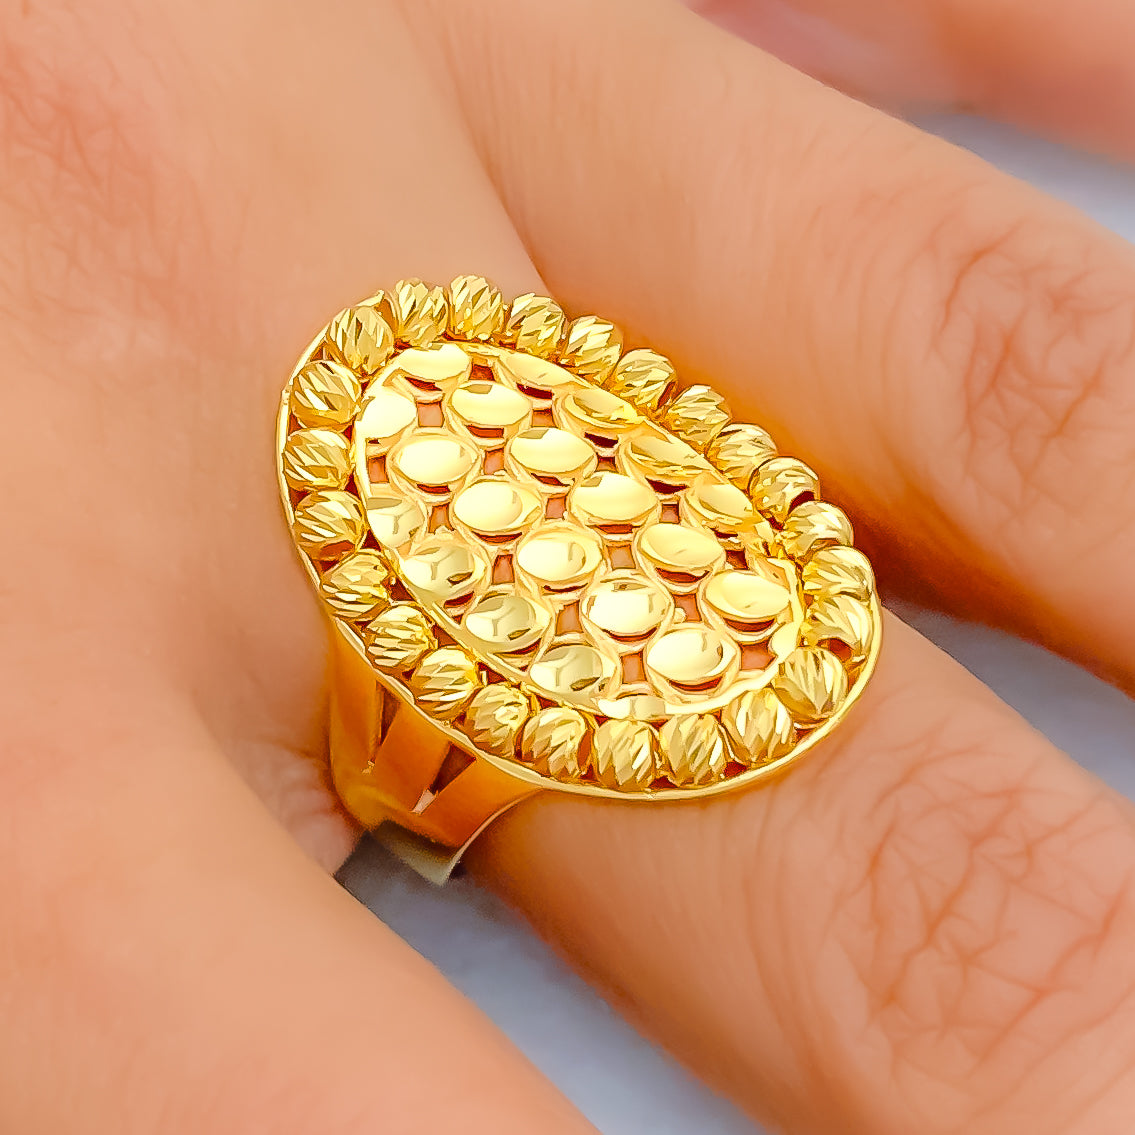 22k Gold Ring Beautiful Multi Stone Studded Ladies Jewelry Select Size  Ring17 | eBay